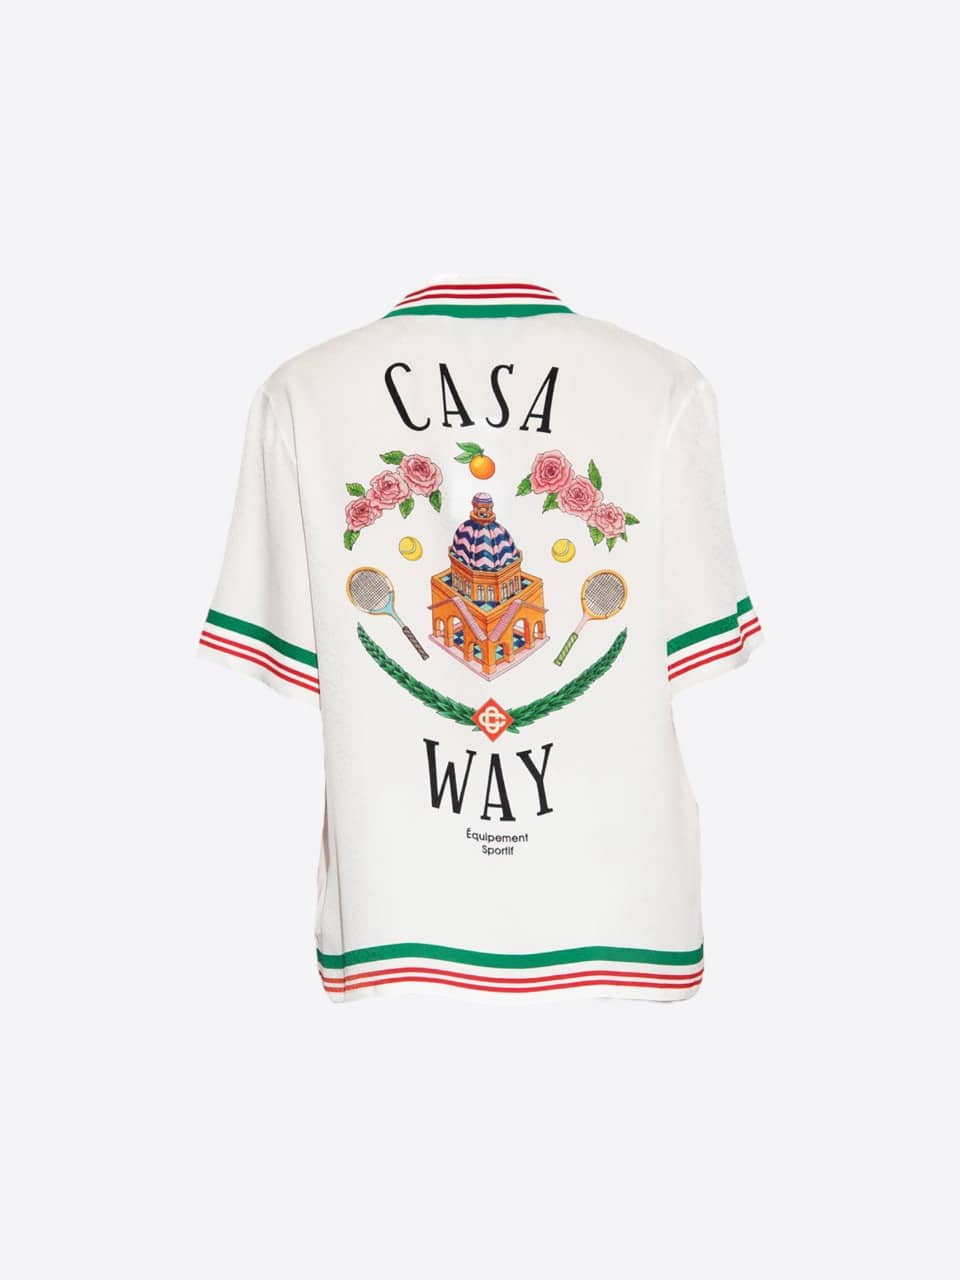 Casablanca Casa Way Silk Shirt 